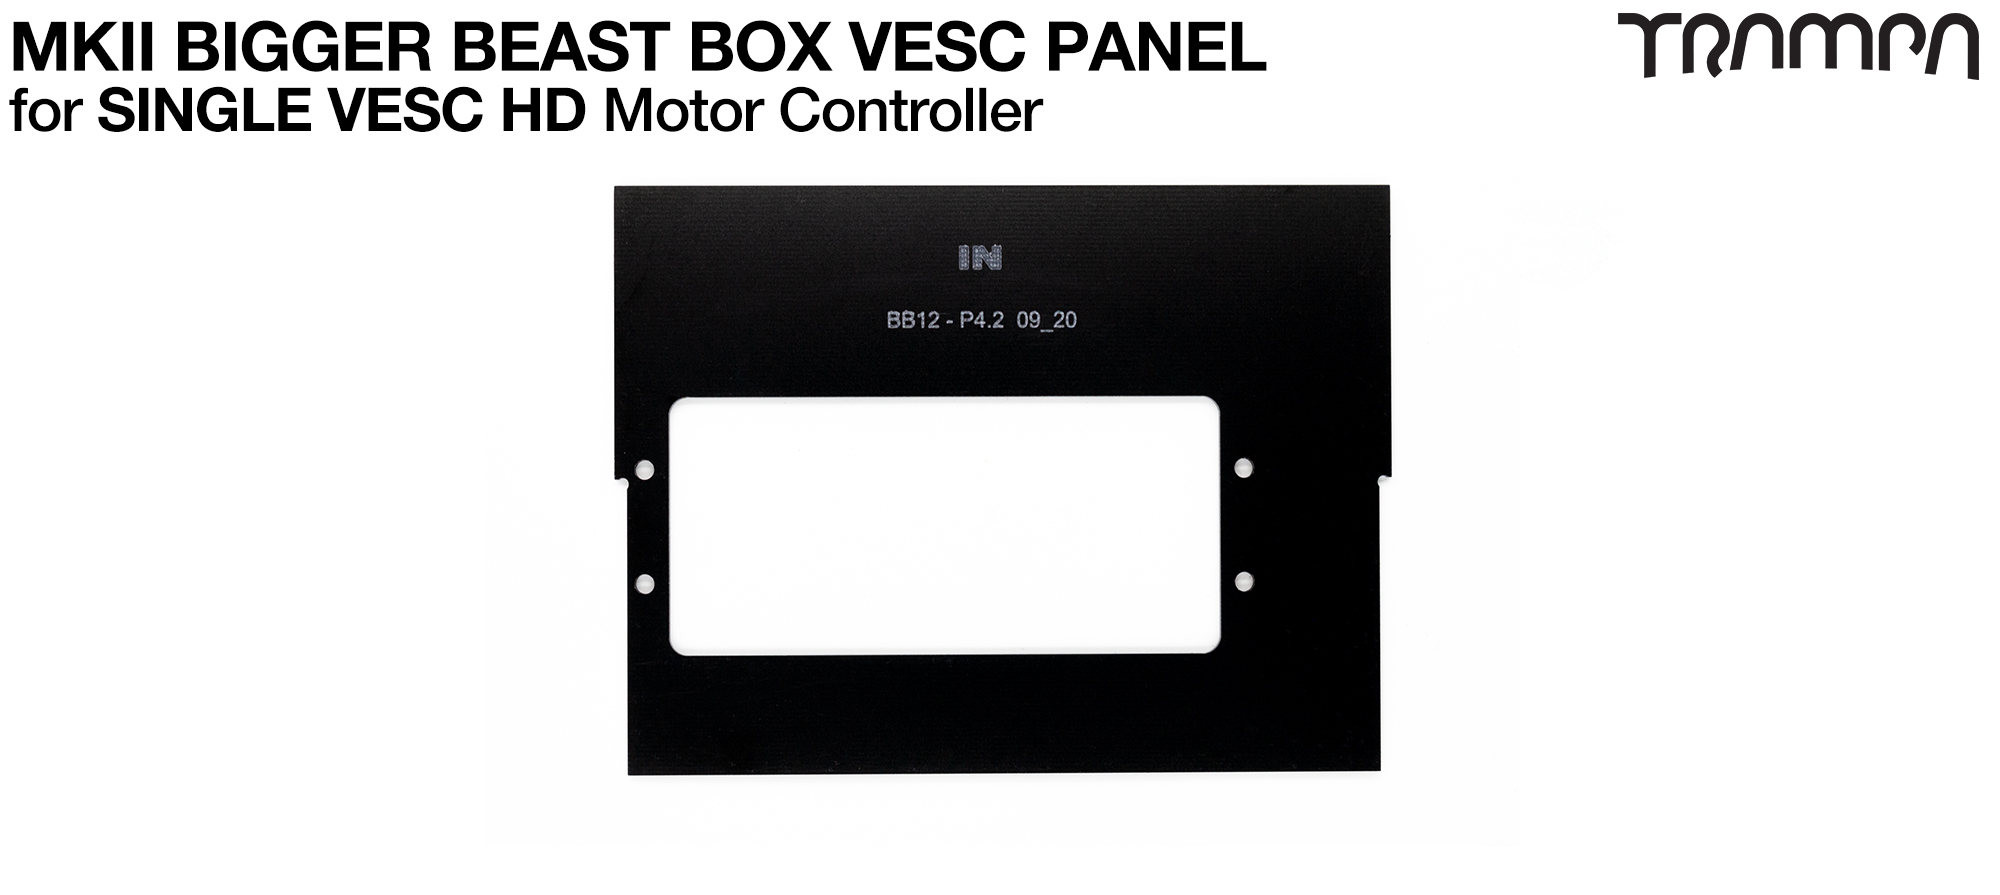 HD-60T VESC Mounting Panel for MkII BIGGER BEAST Box 